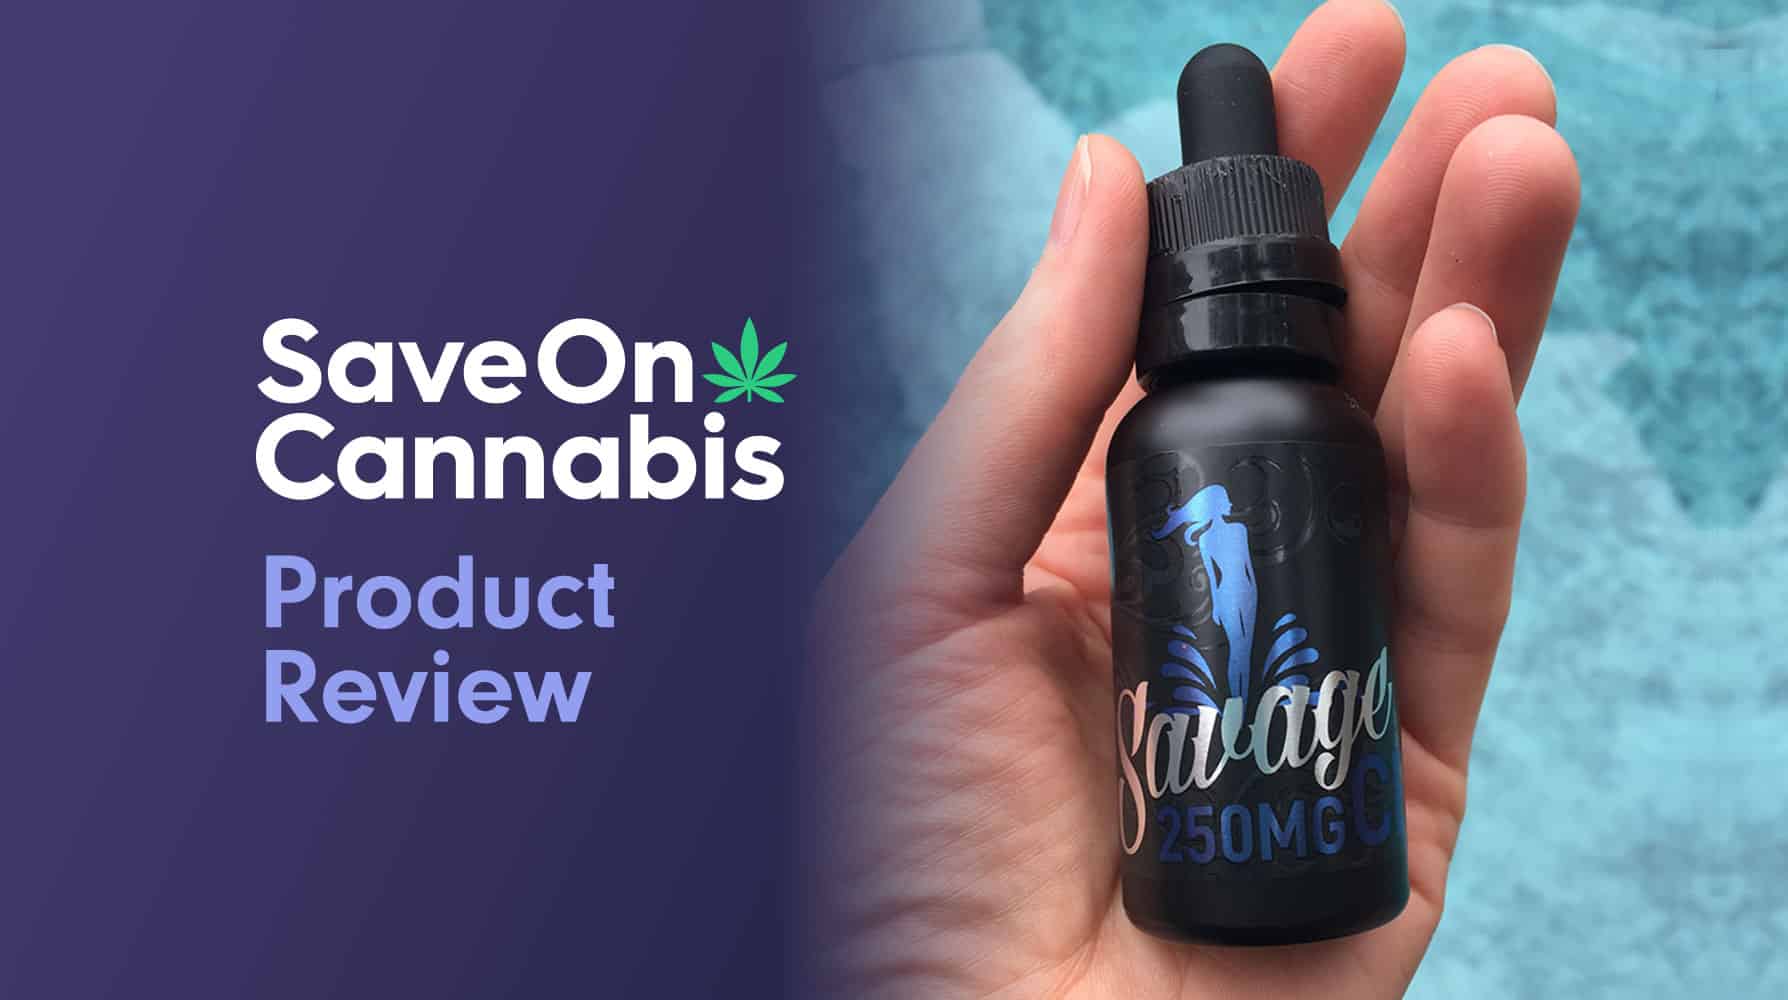 savage cbd driven vape juice 250 mg review save on cannabis website